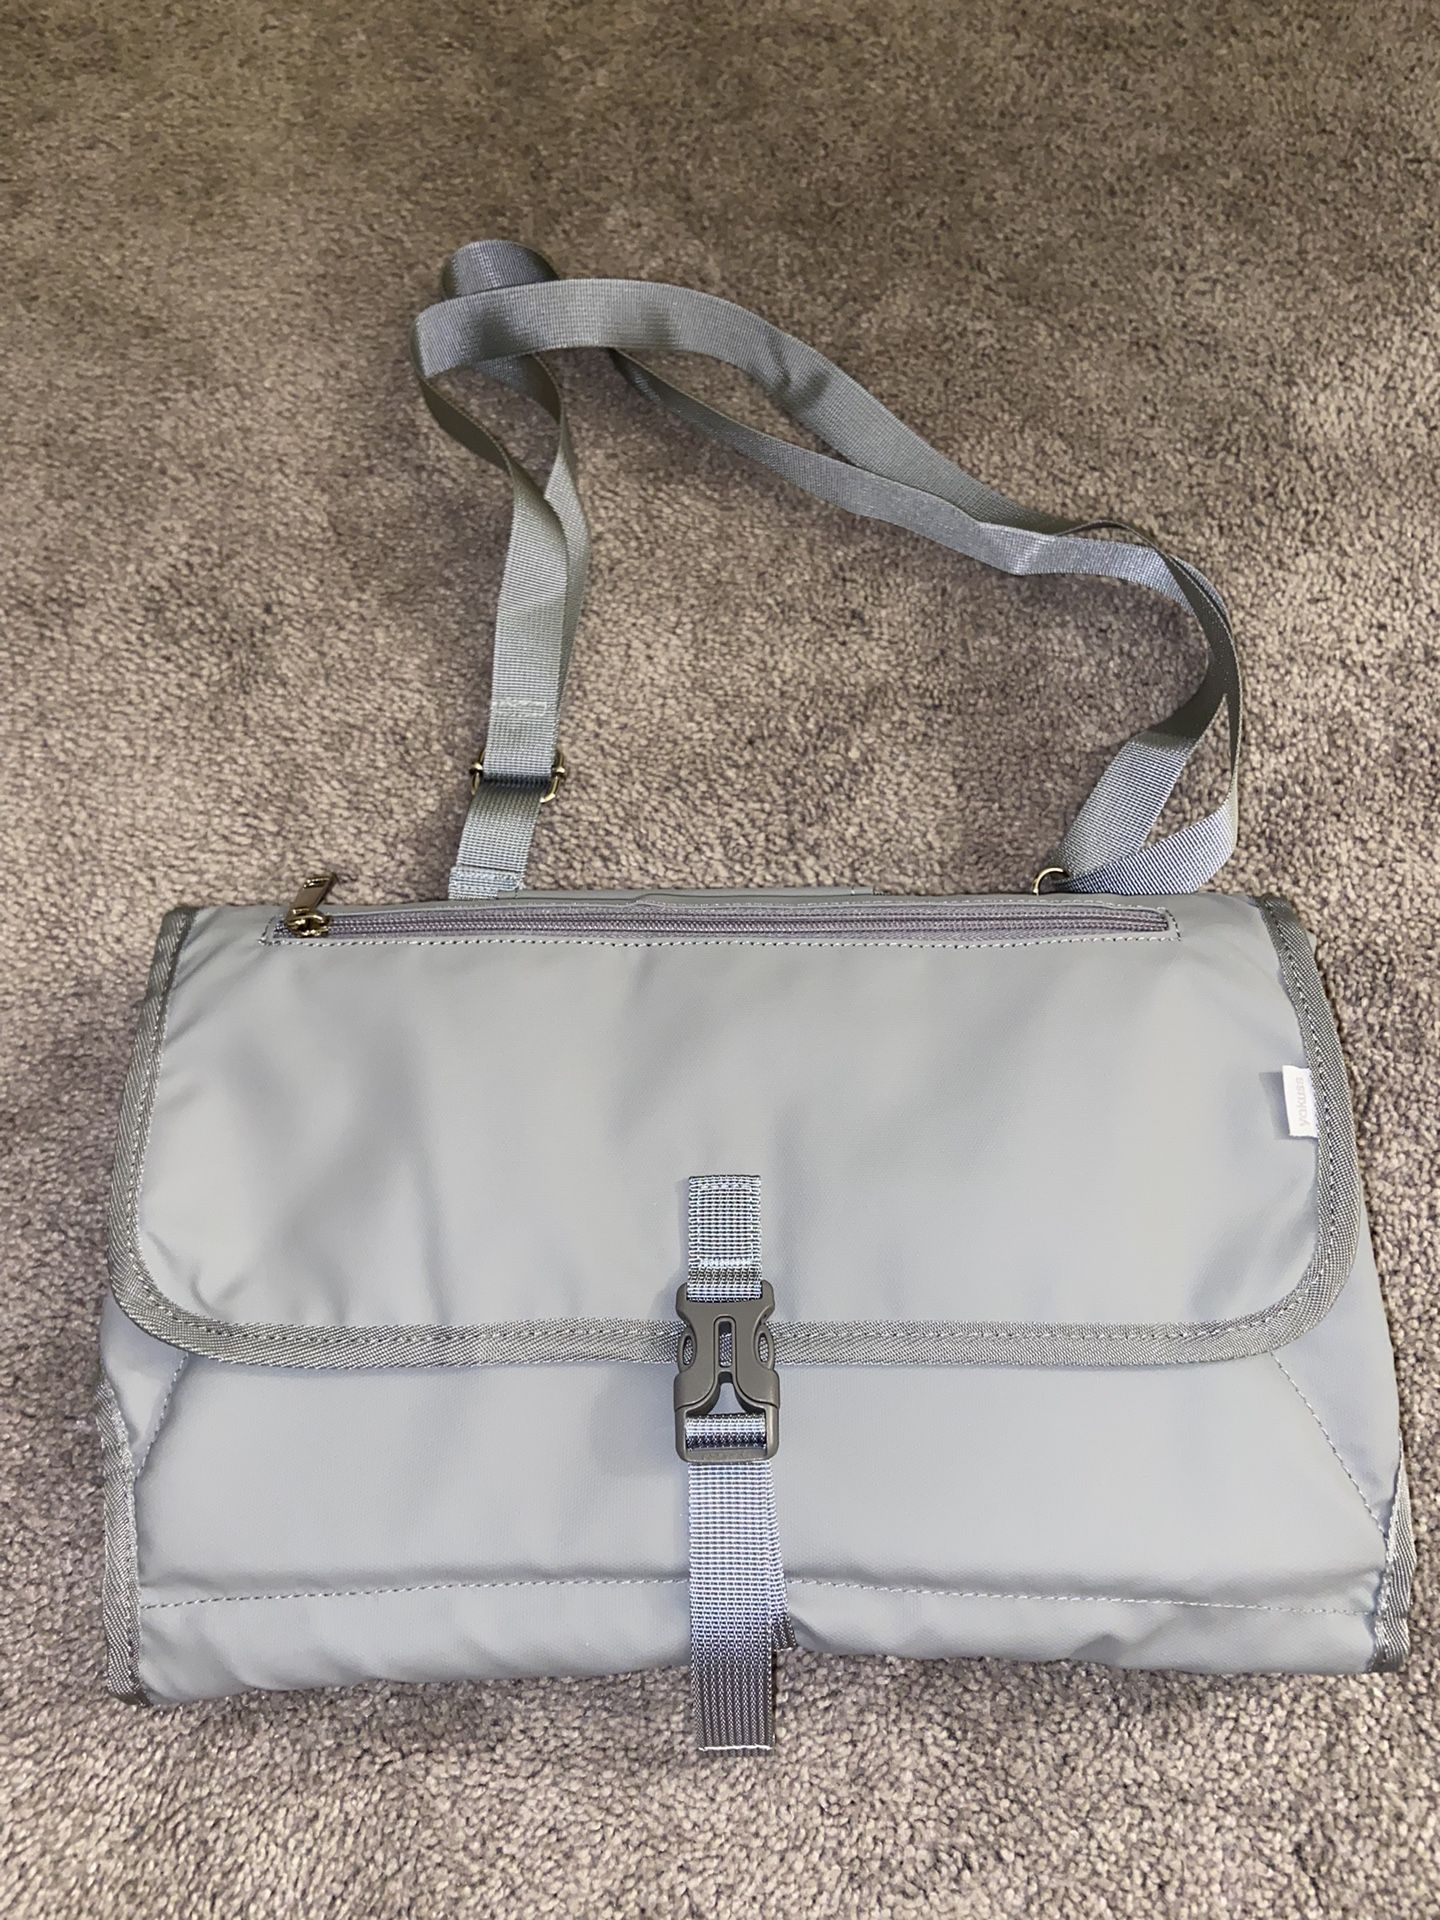 travel changing bag and diaper bag